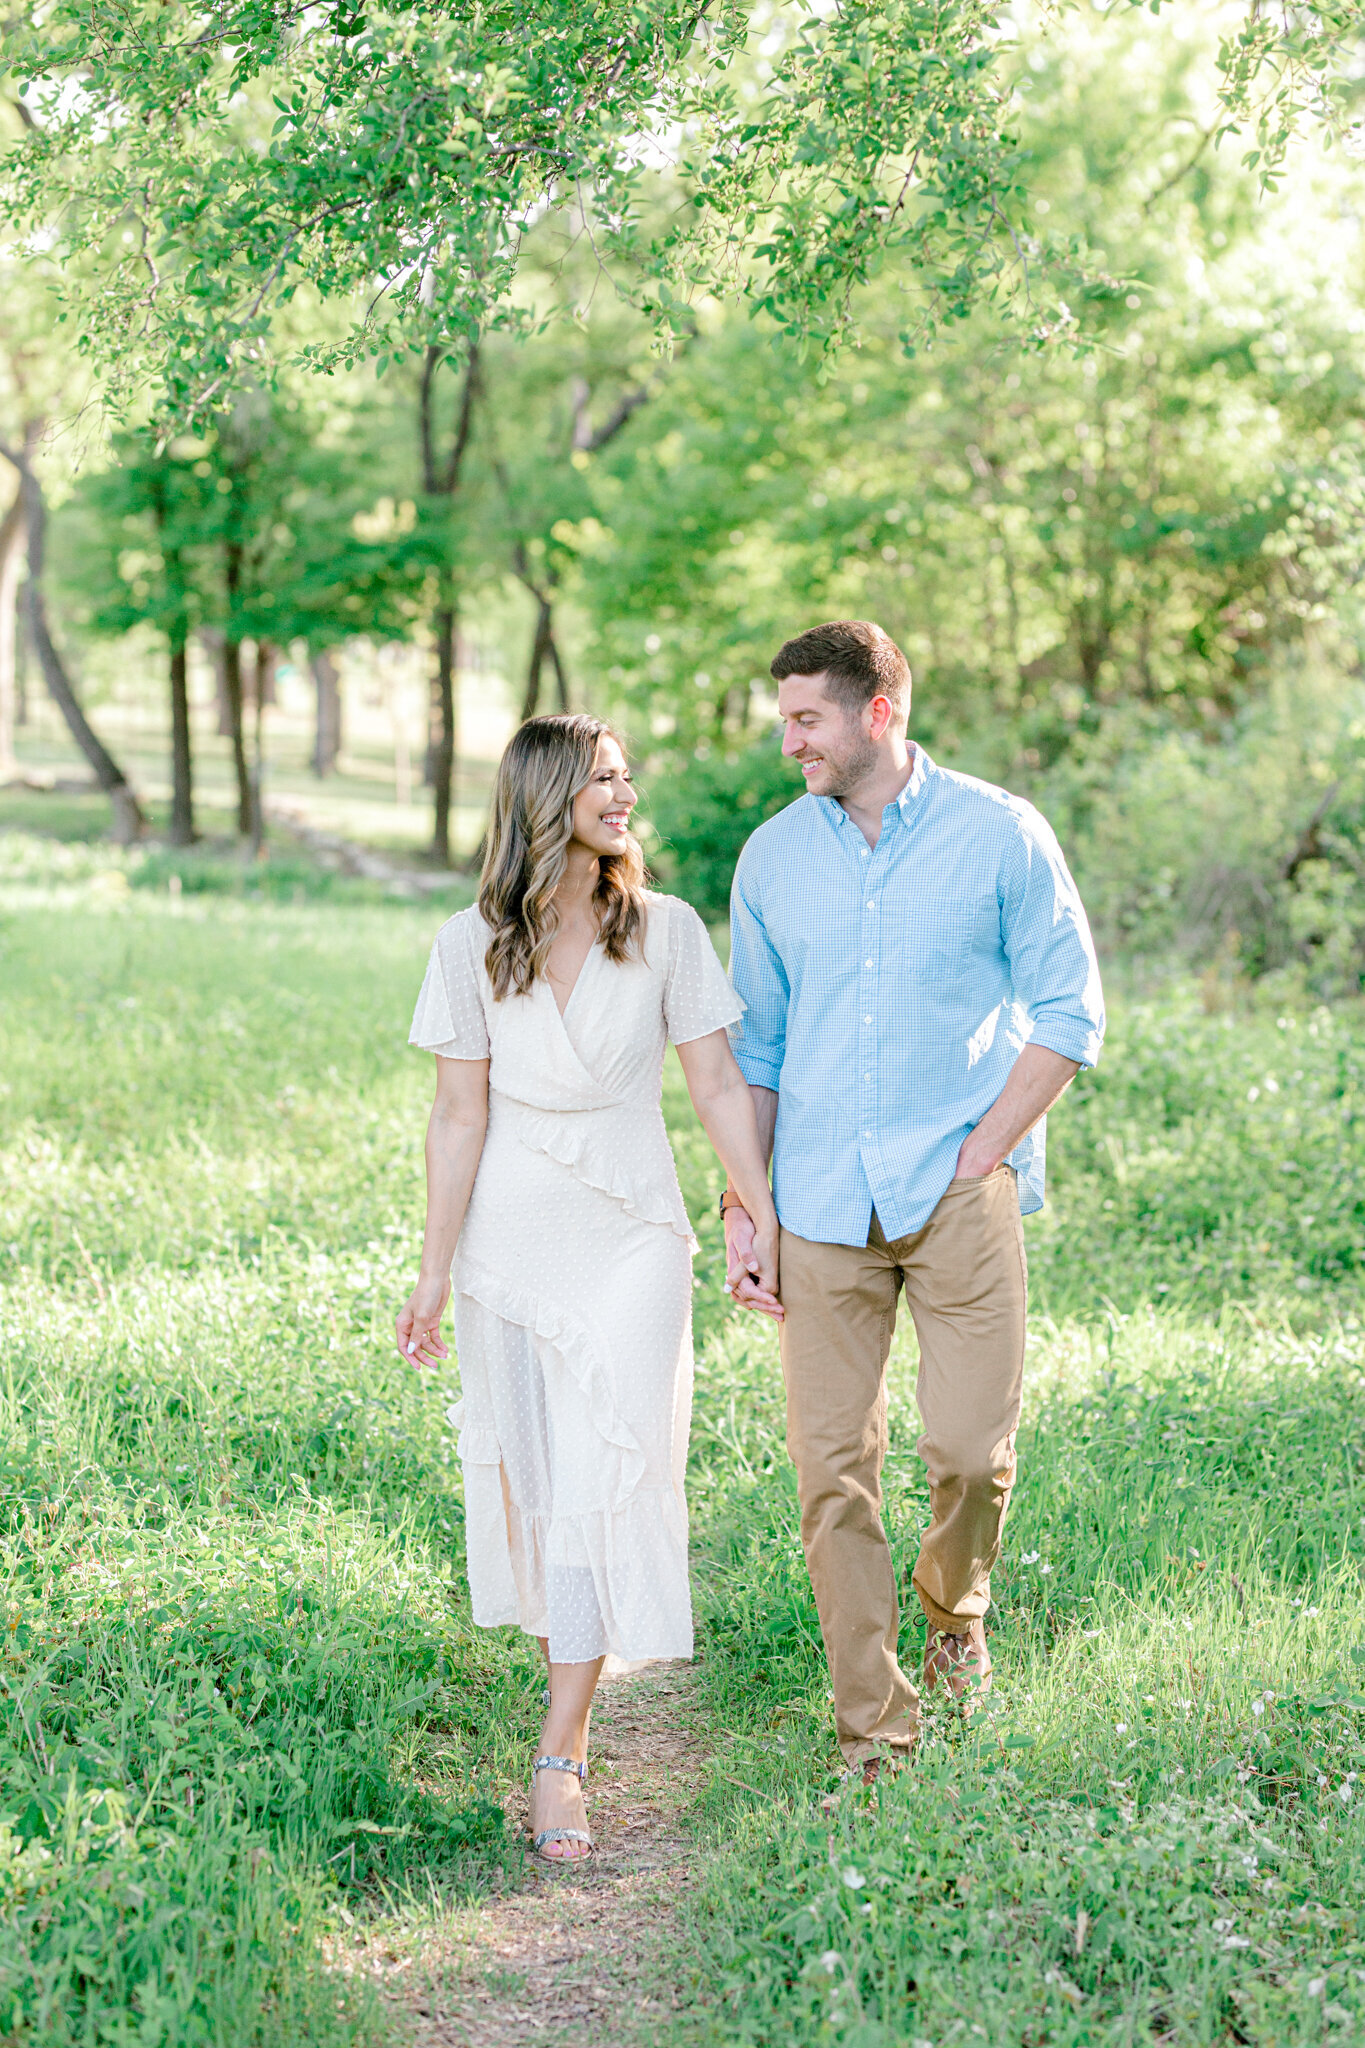 Anna & Brendan White Rock Lake Engagement Session | Dallas Wedding Photographer | Sami Kathryn Photography-4